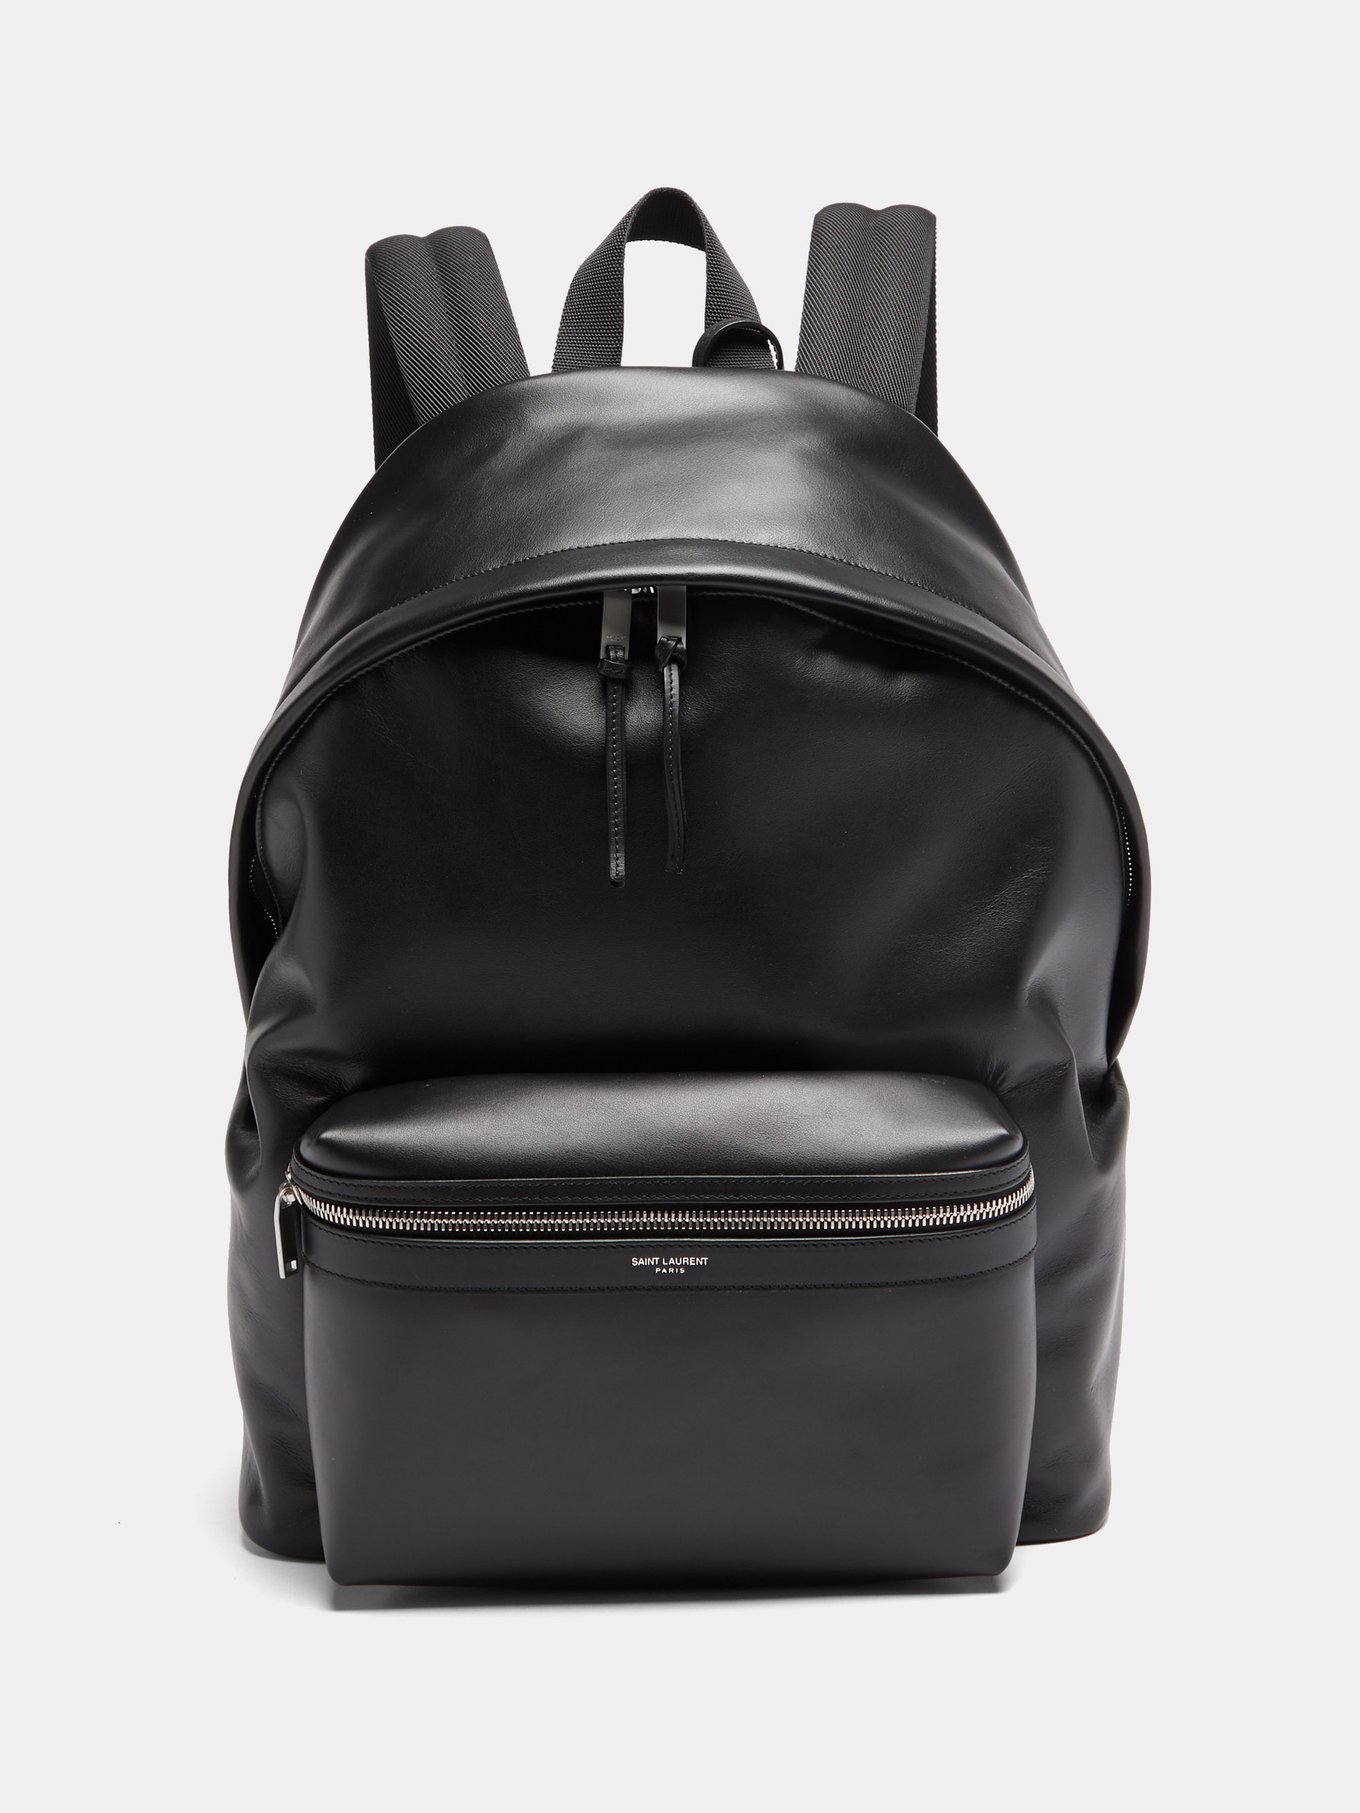 Black City leather backpack, Saint Laurent